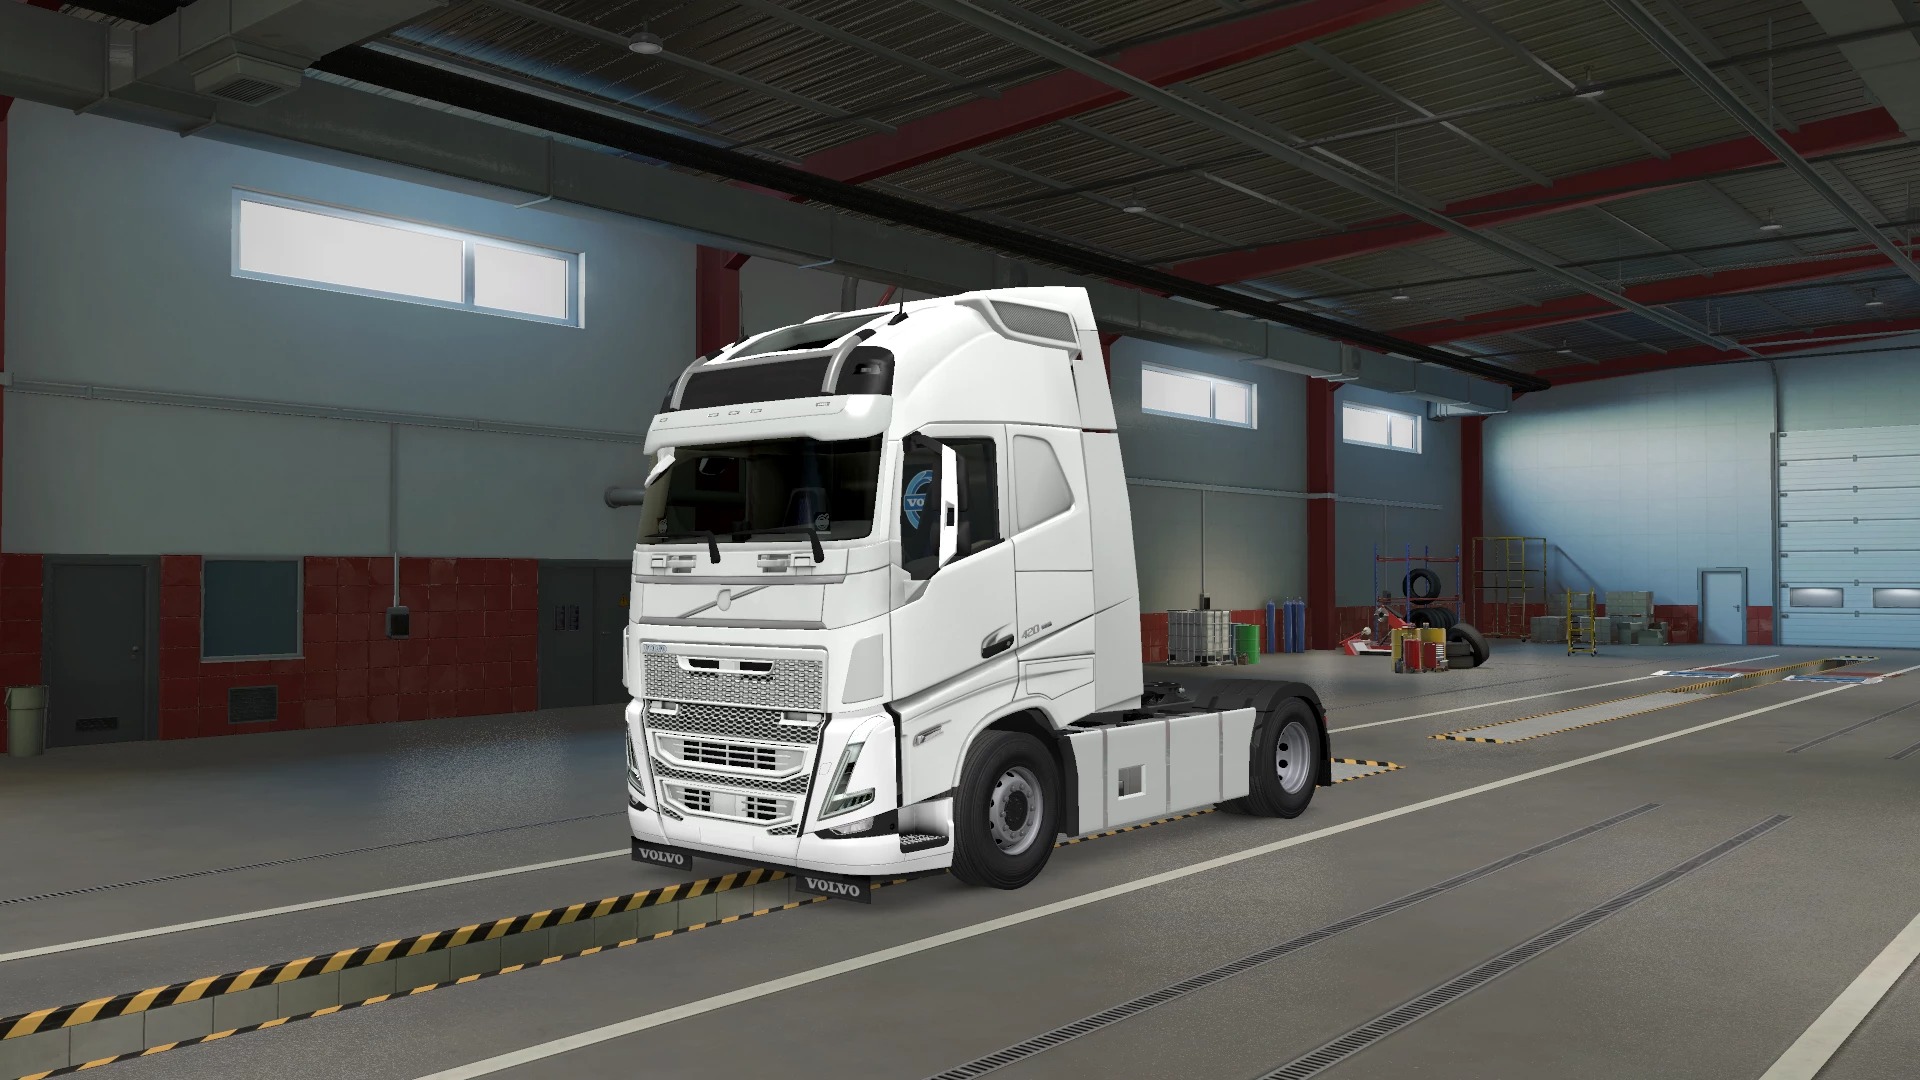 FH5 Archives - ETS 2 mods, Ets2 map, Euro truck simulator 2 mods download